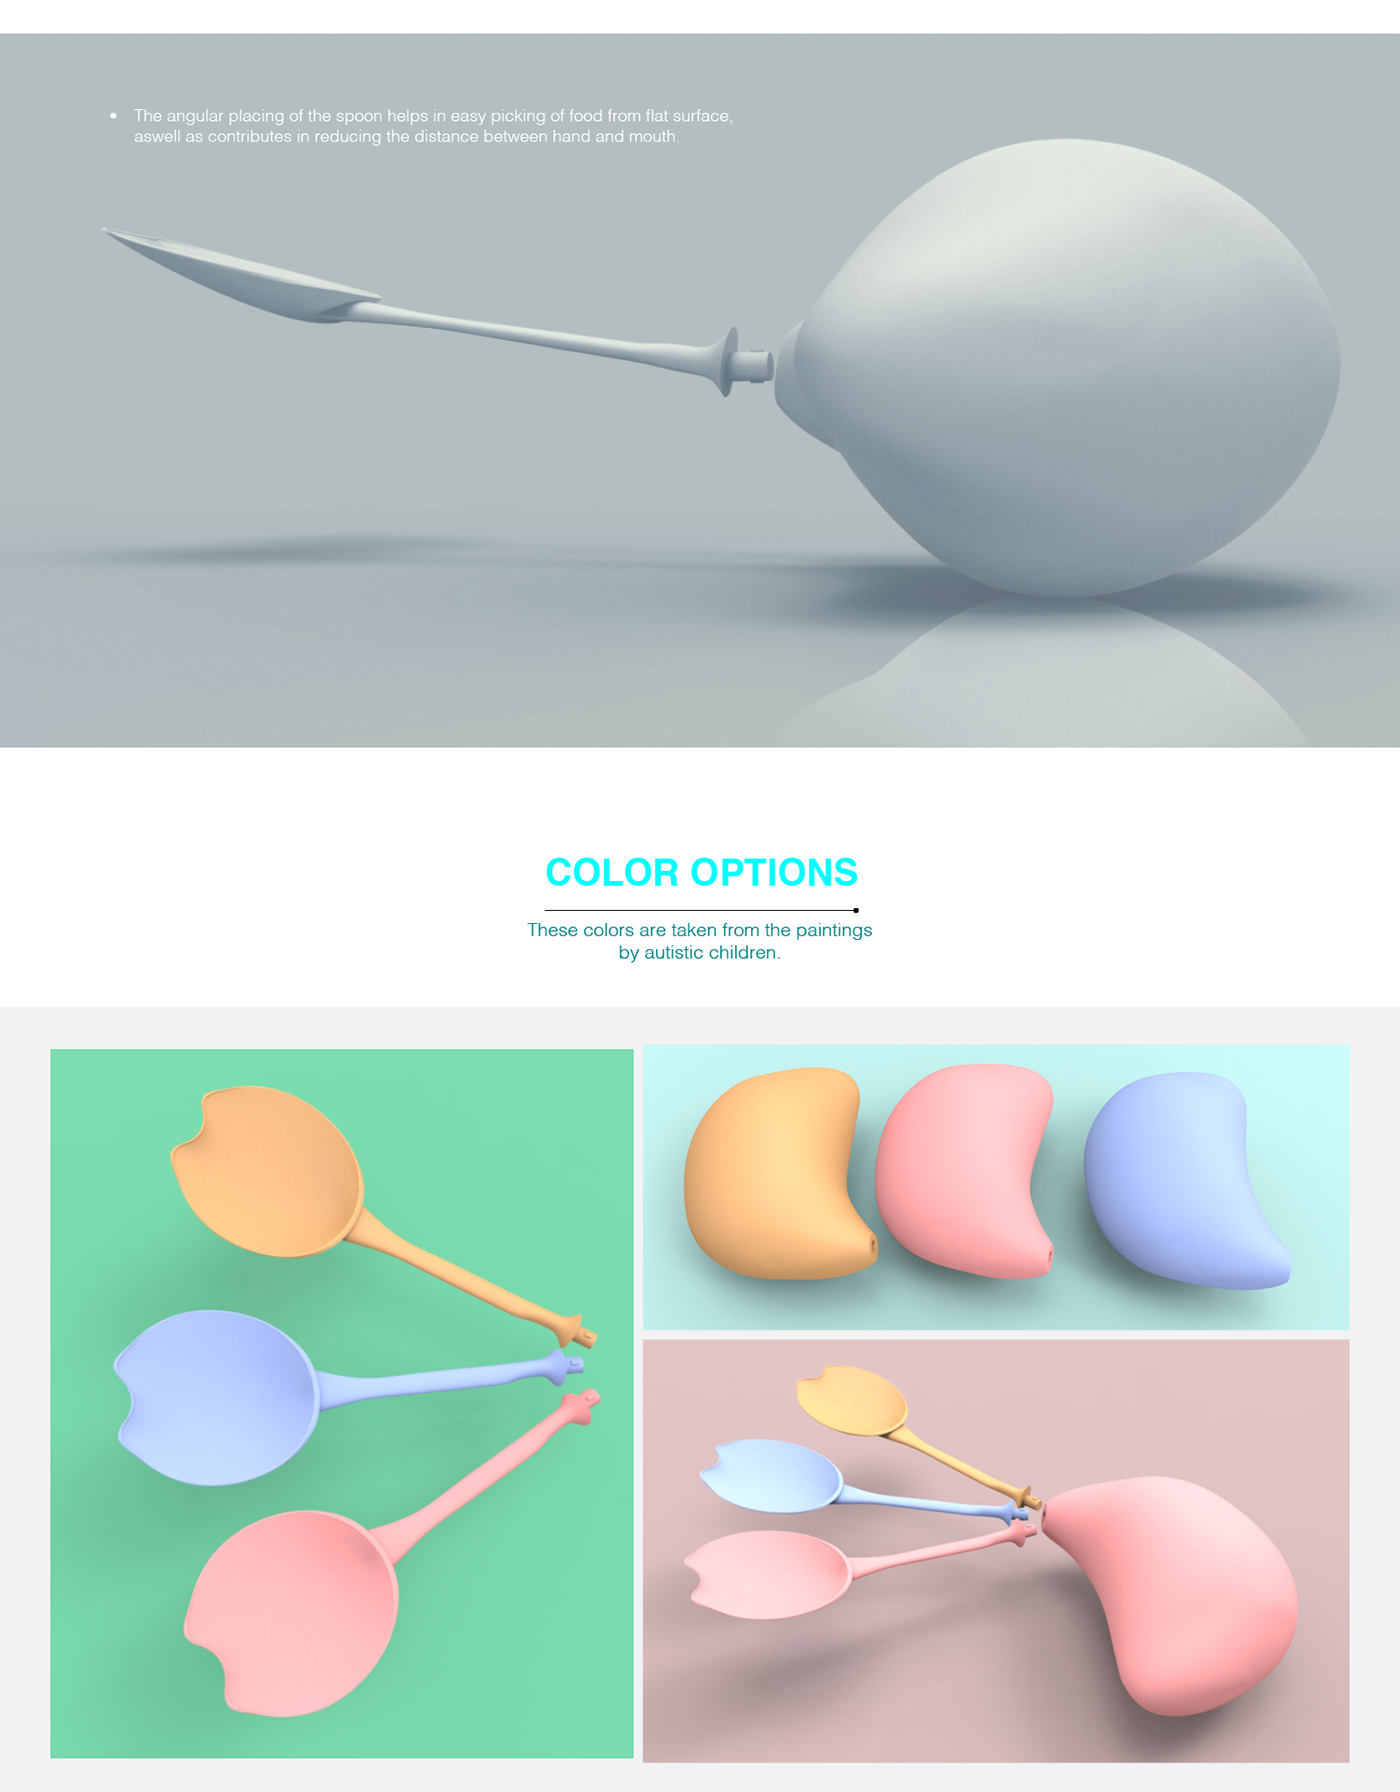 product design  Design for special needs Autistic Children industrial design  spoon